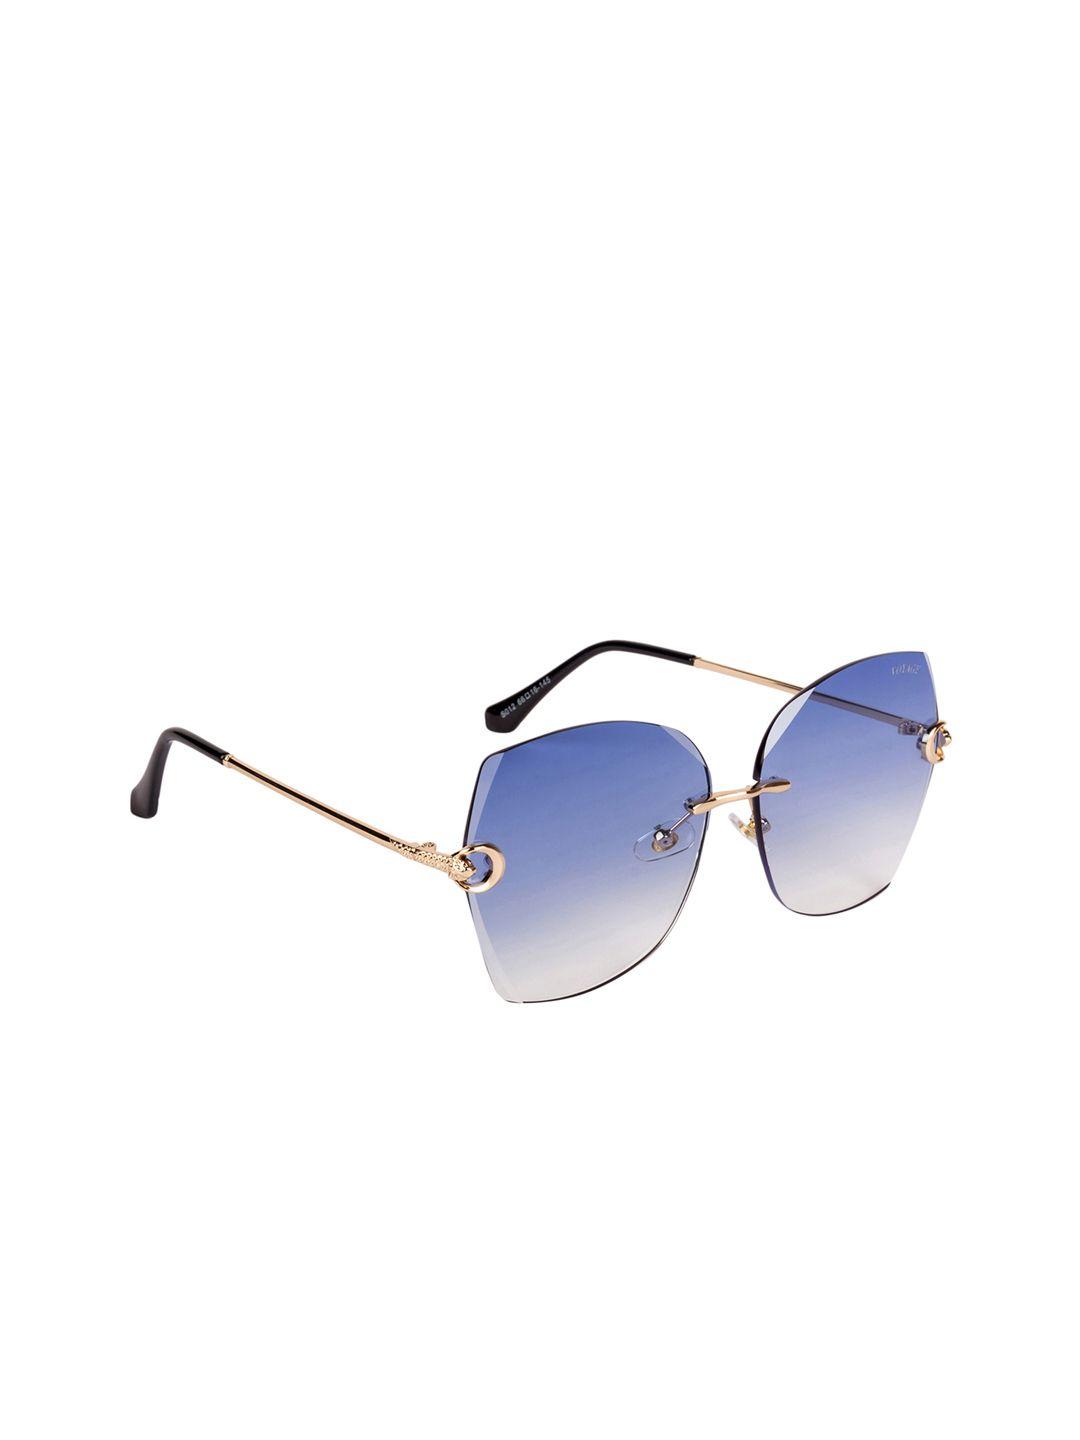 voyage women blue square sunglasses s012mg2880